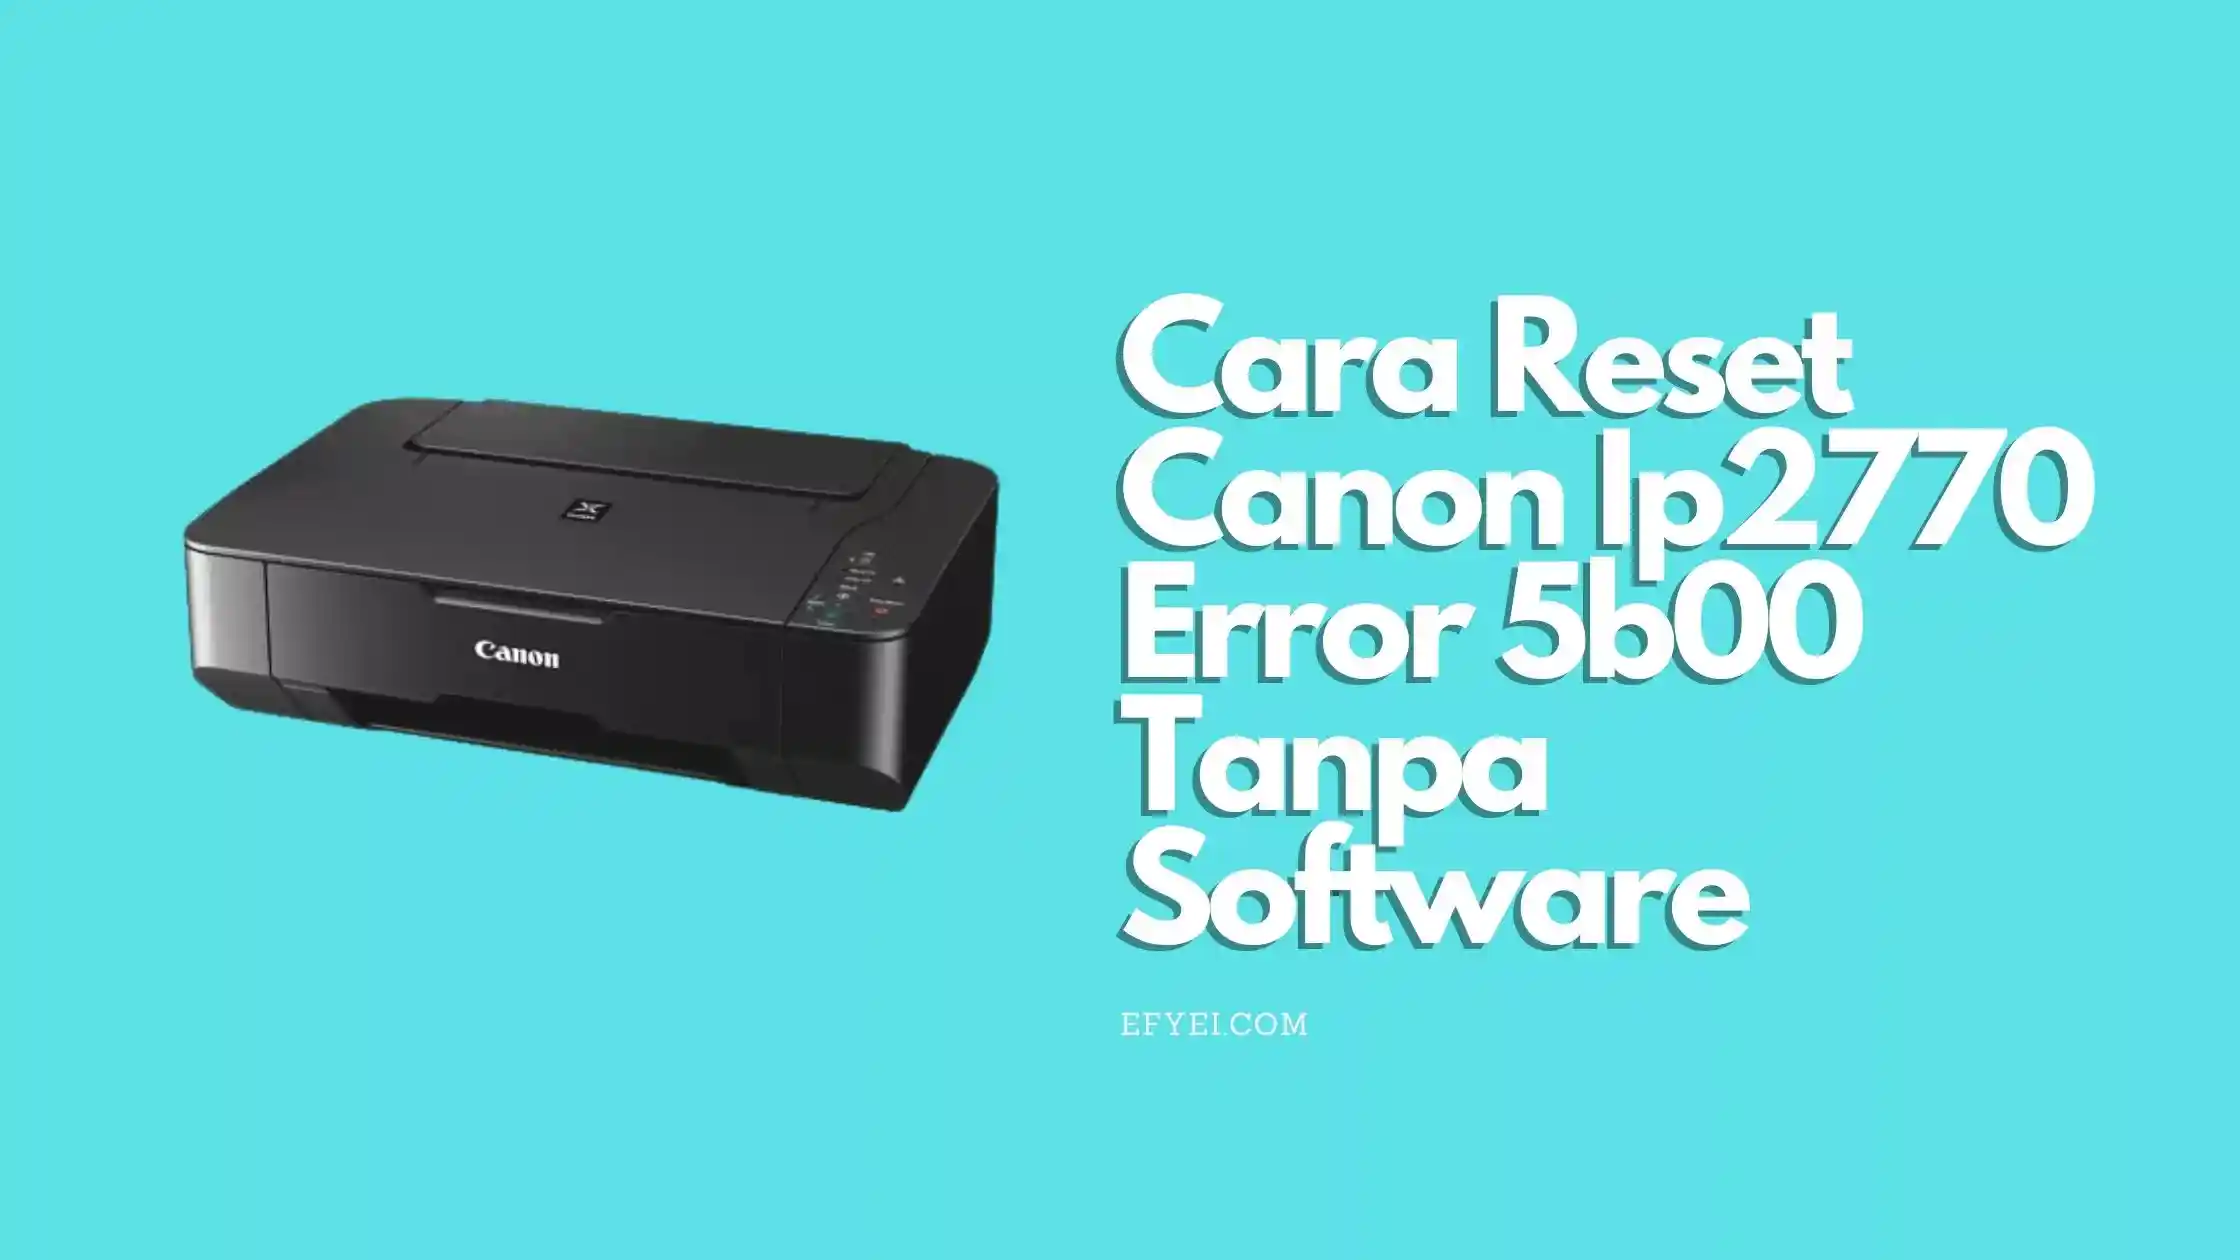 Cara Reset Canon Ip2770 Error 5b00 Tanpa Software